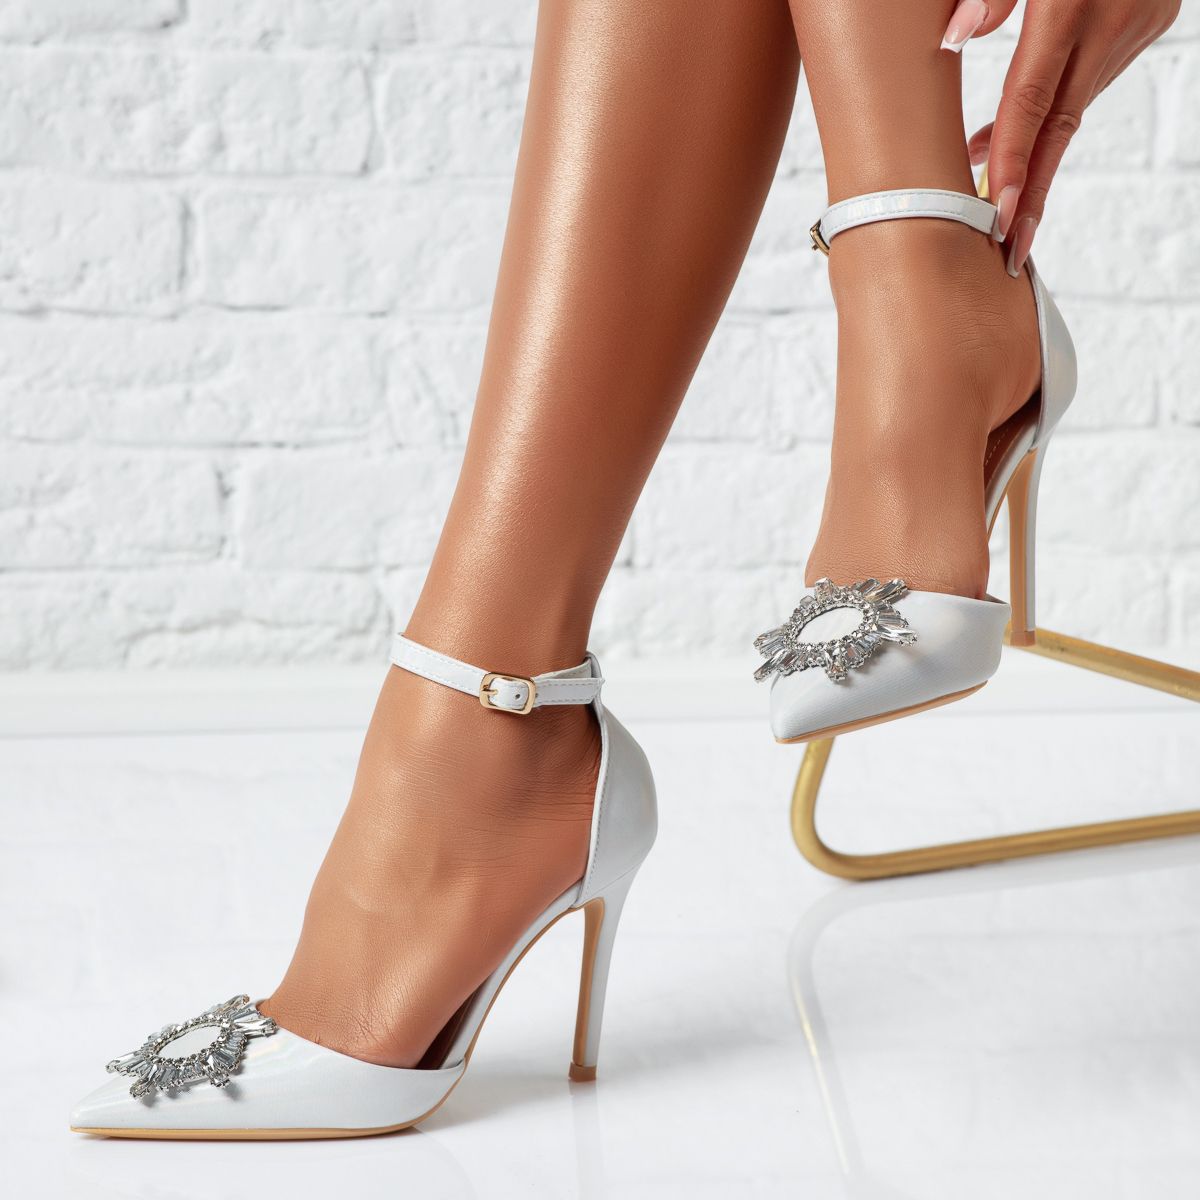 Pantofi Dama cu Toc Oliver Argintii #14107